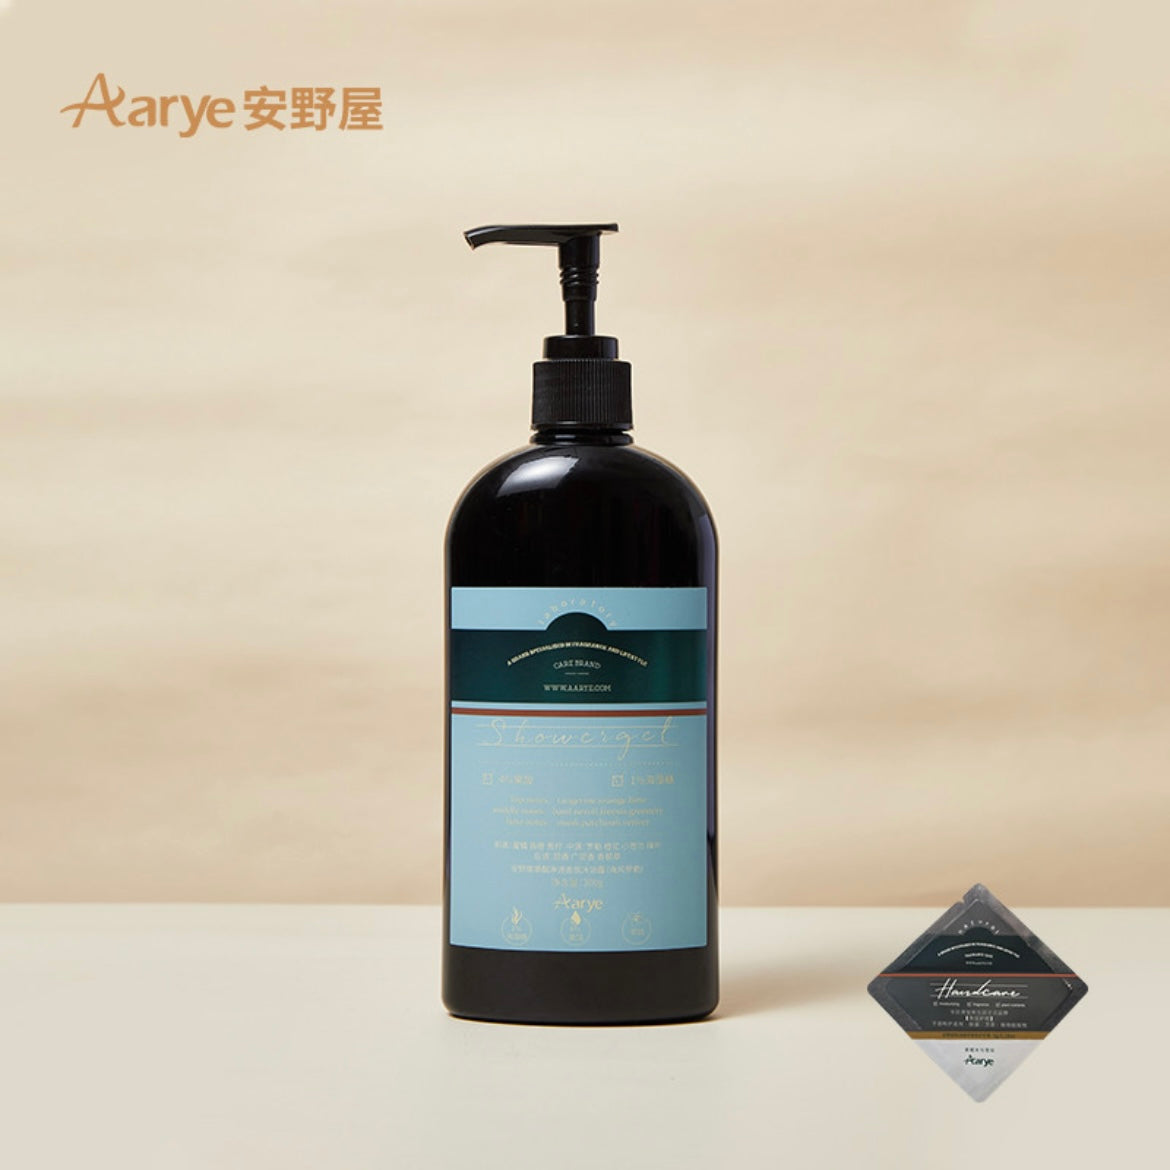 Aarye Long-Lasting Fragrance Moisturizing Fruit Acid Shower Gel 300g 安野屋持久留香果酸沐浴露